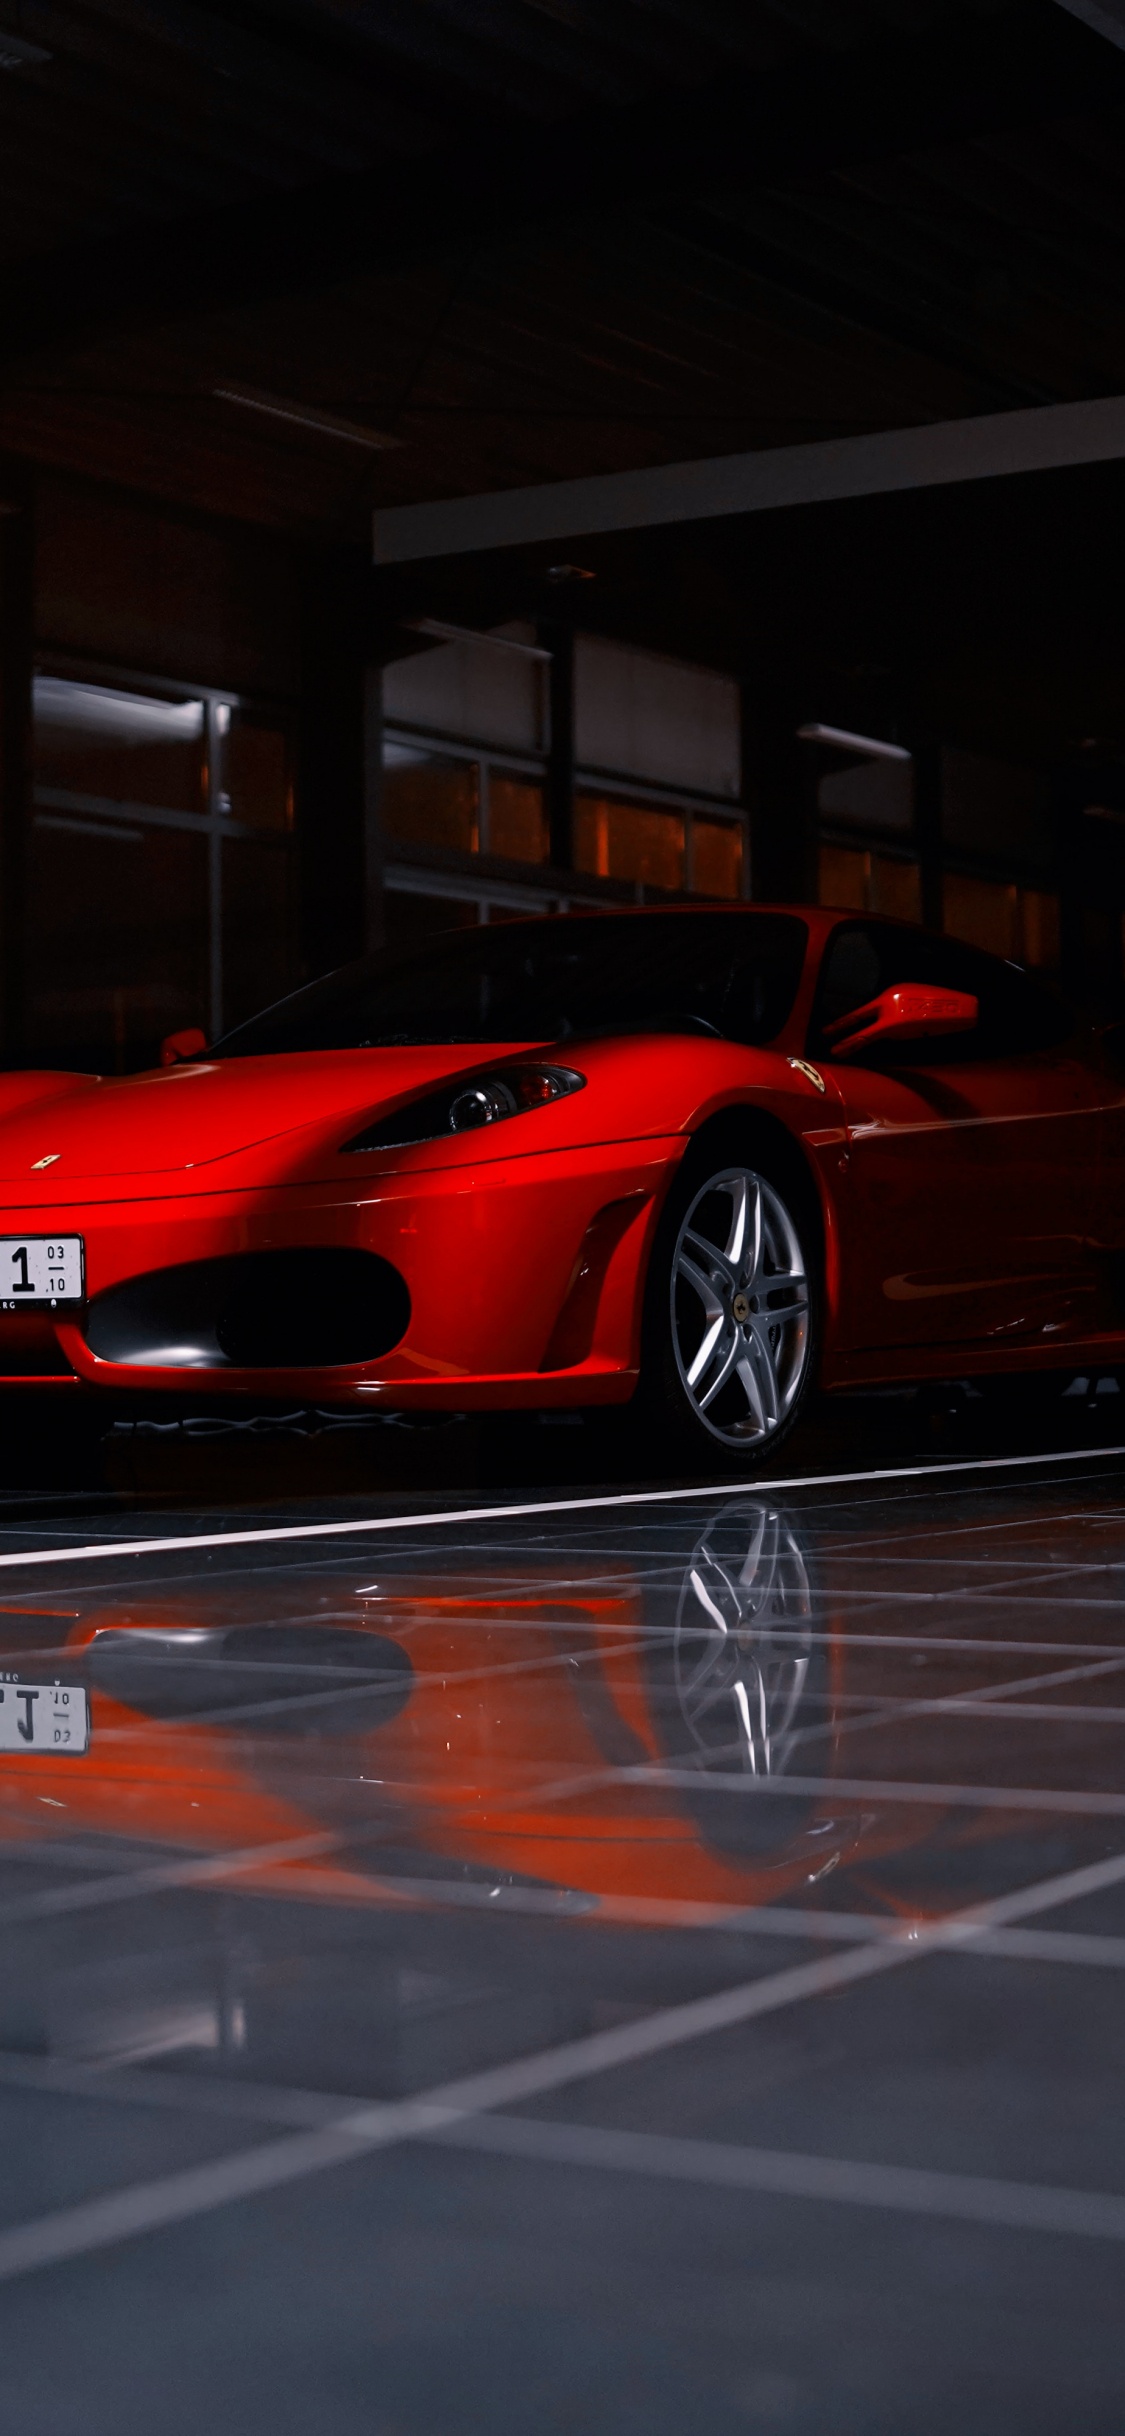 Red Ferrari 458 Italia Parked on Parking Lot. Wallpaper in 1125x2436 Resolution